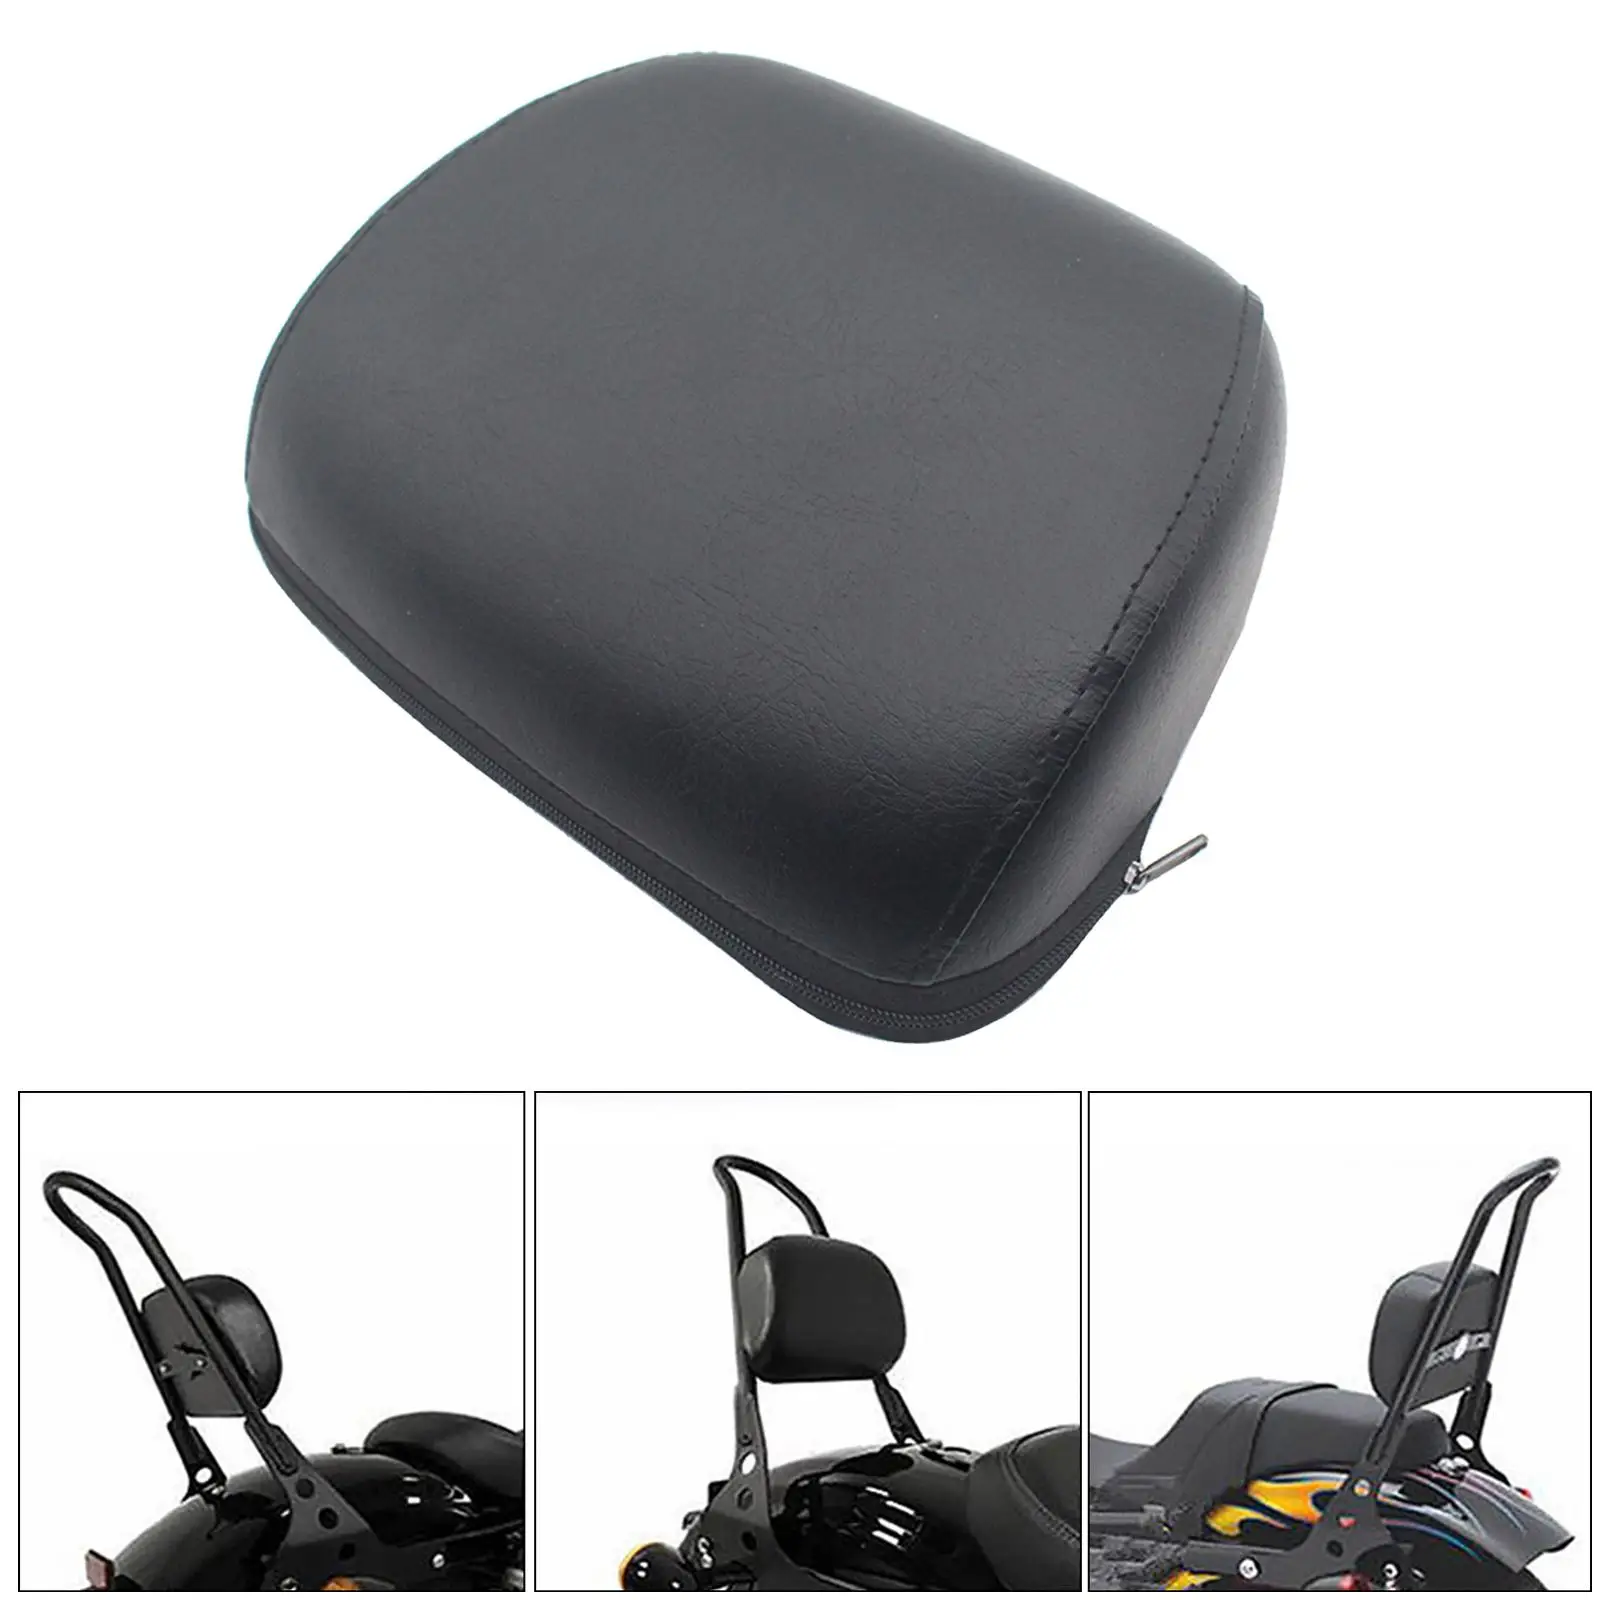 Backrest Pad Pads Back Rest Passenger Detachable for  8800 48 Accesseries Replacement Part Motorcycle Parts